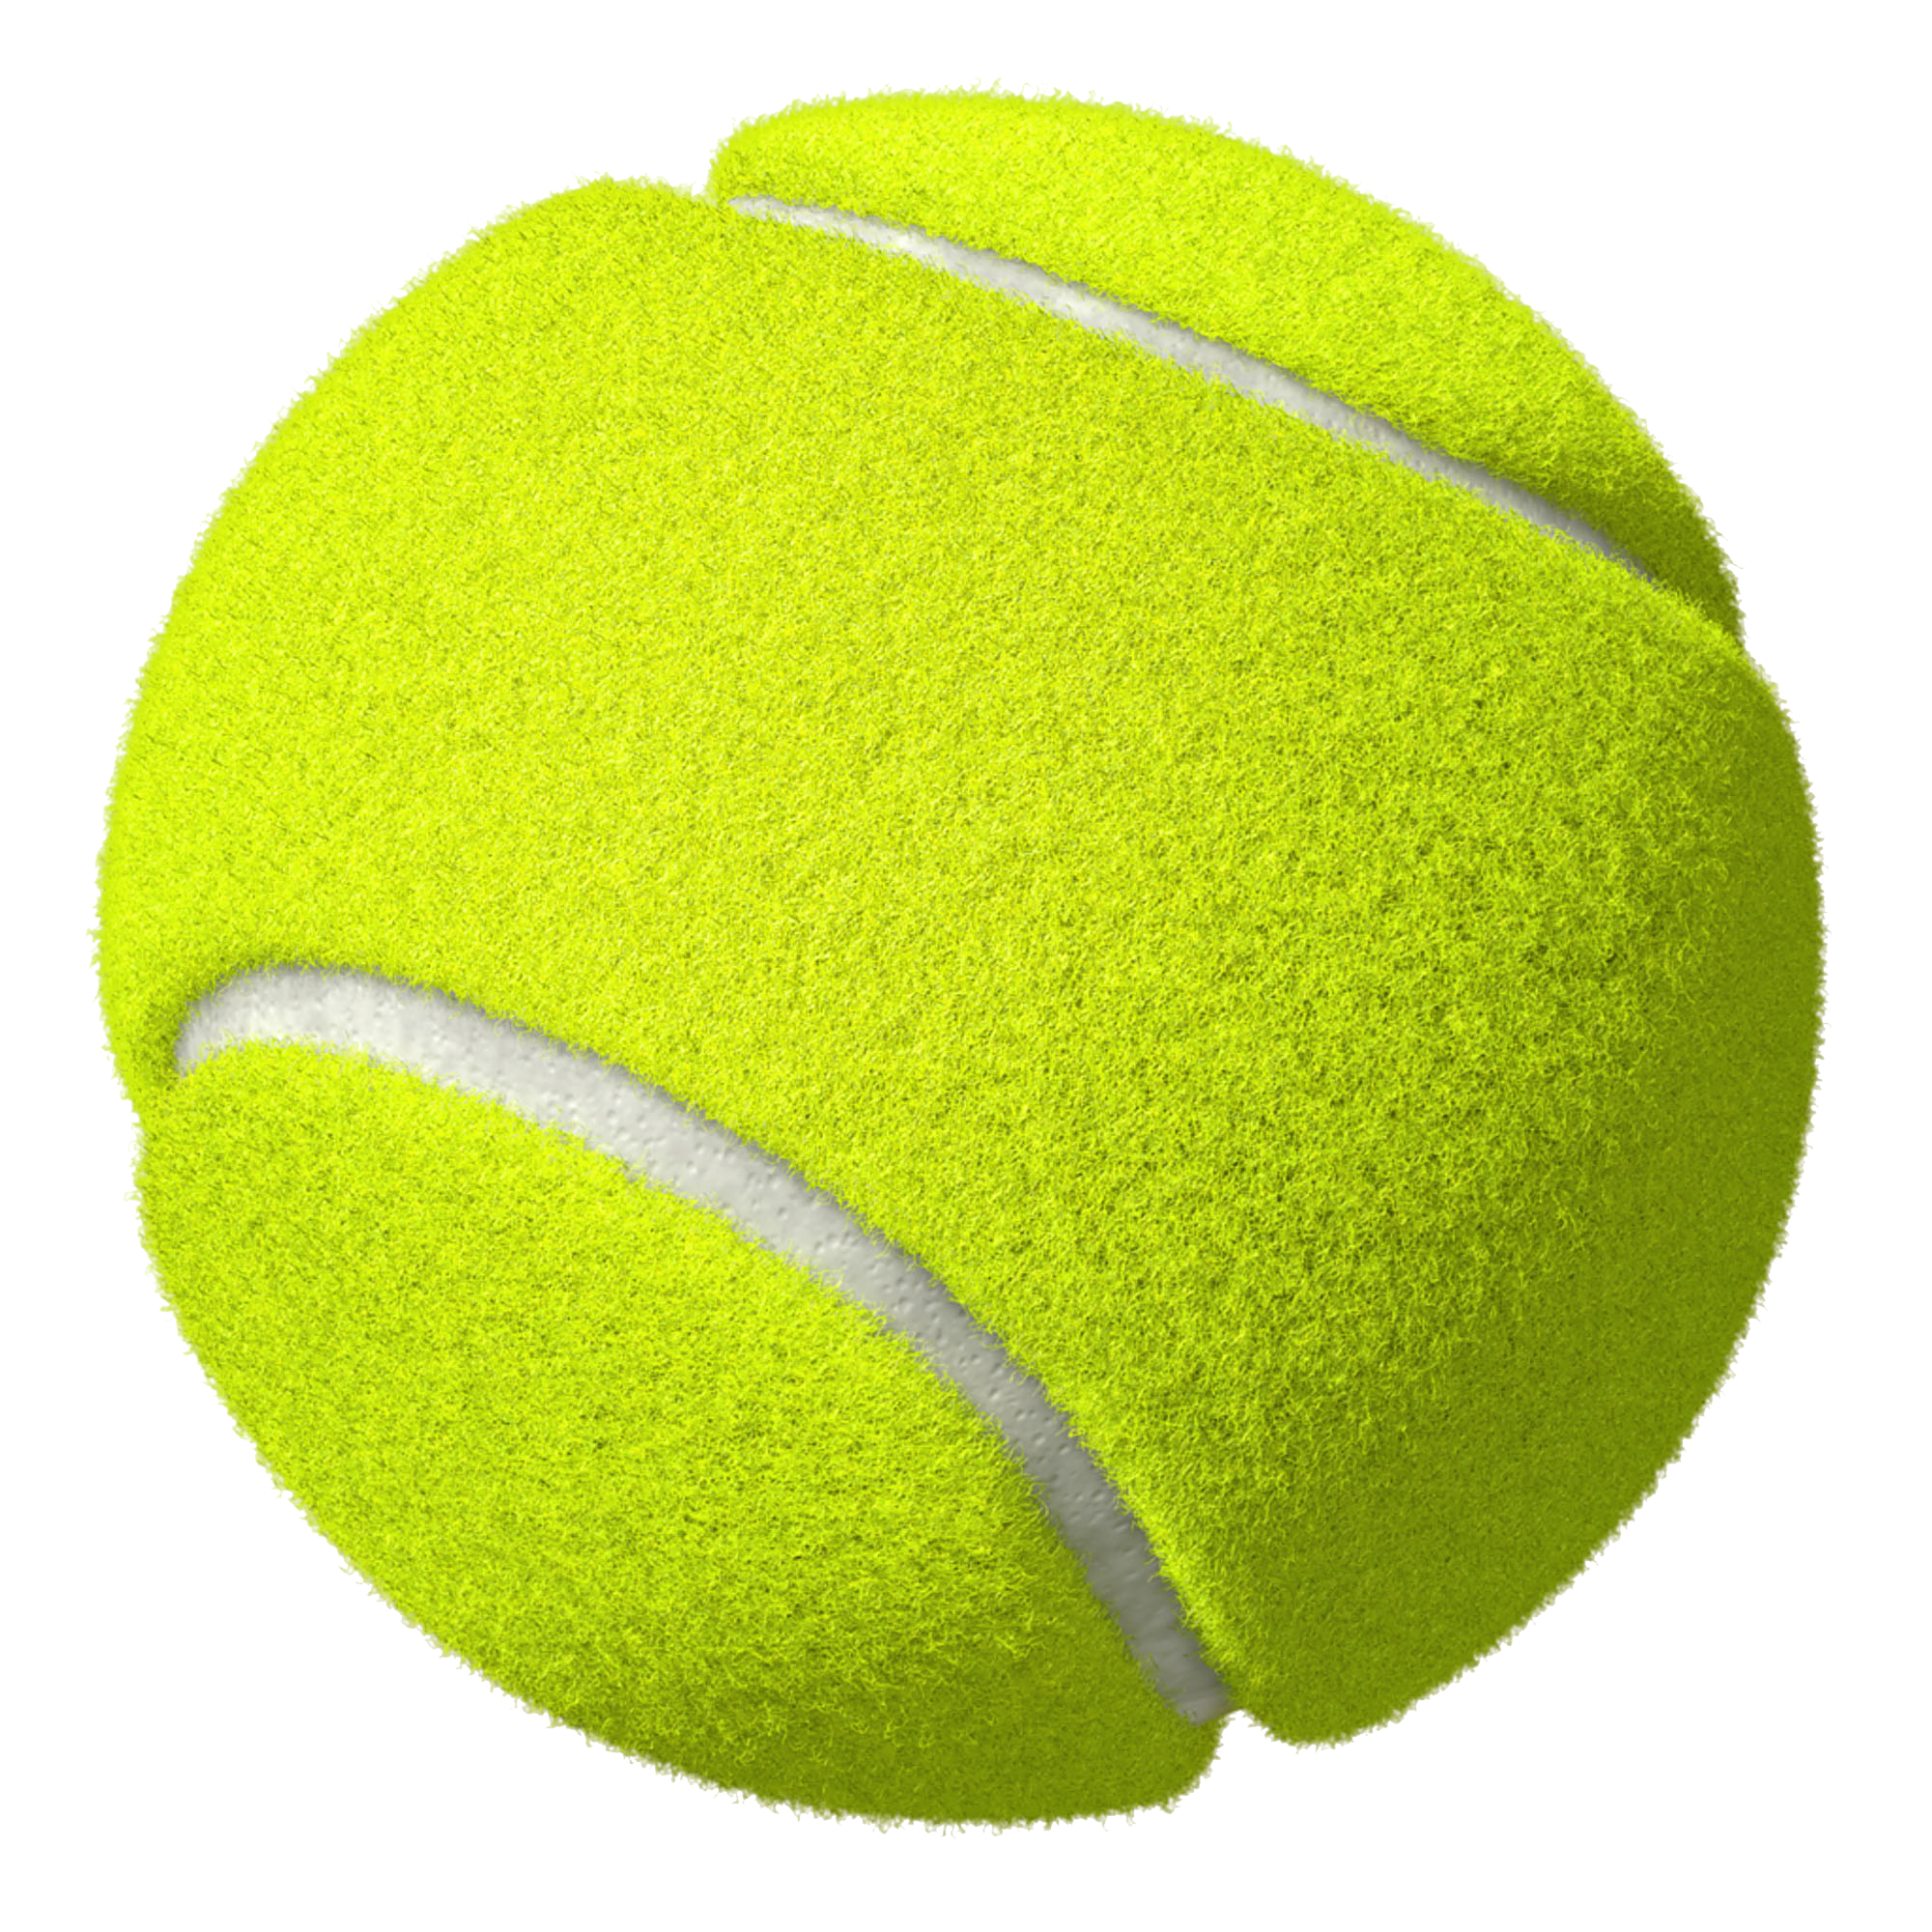 Tennis ball clipart no background 